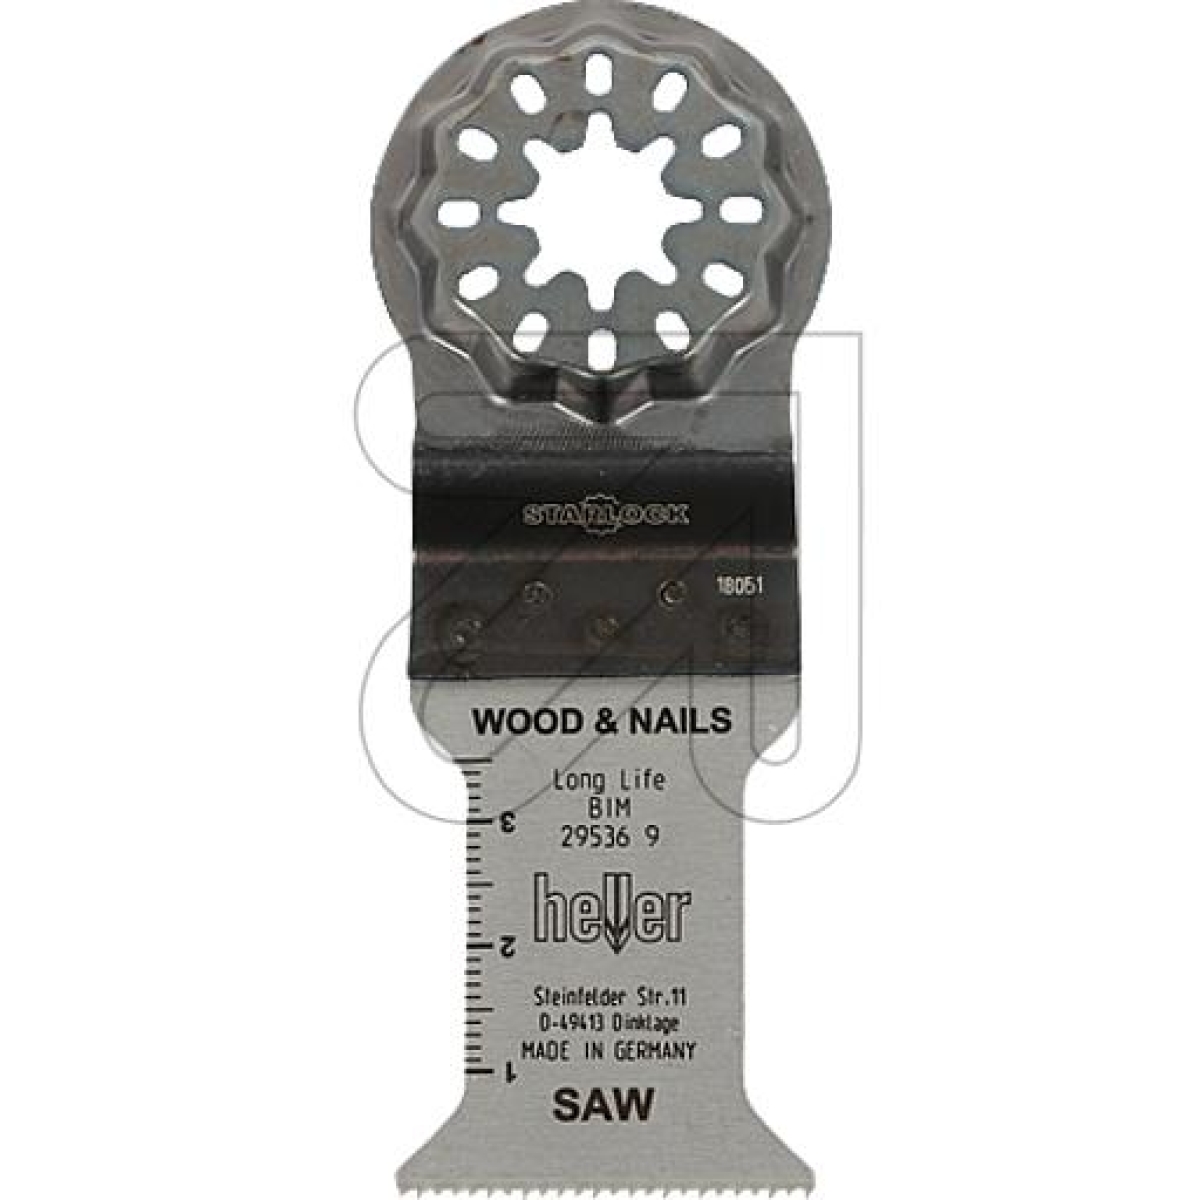 BIMwood and nails saw, 50 x 35mm 29536 9